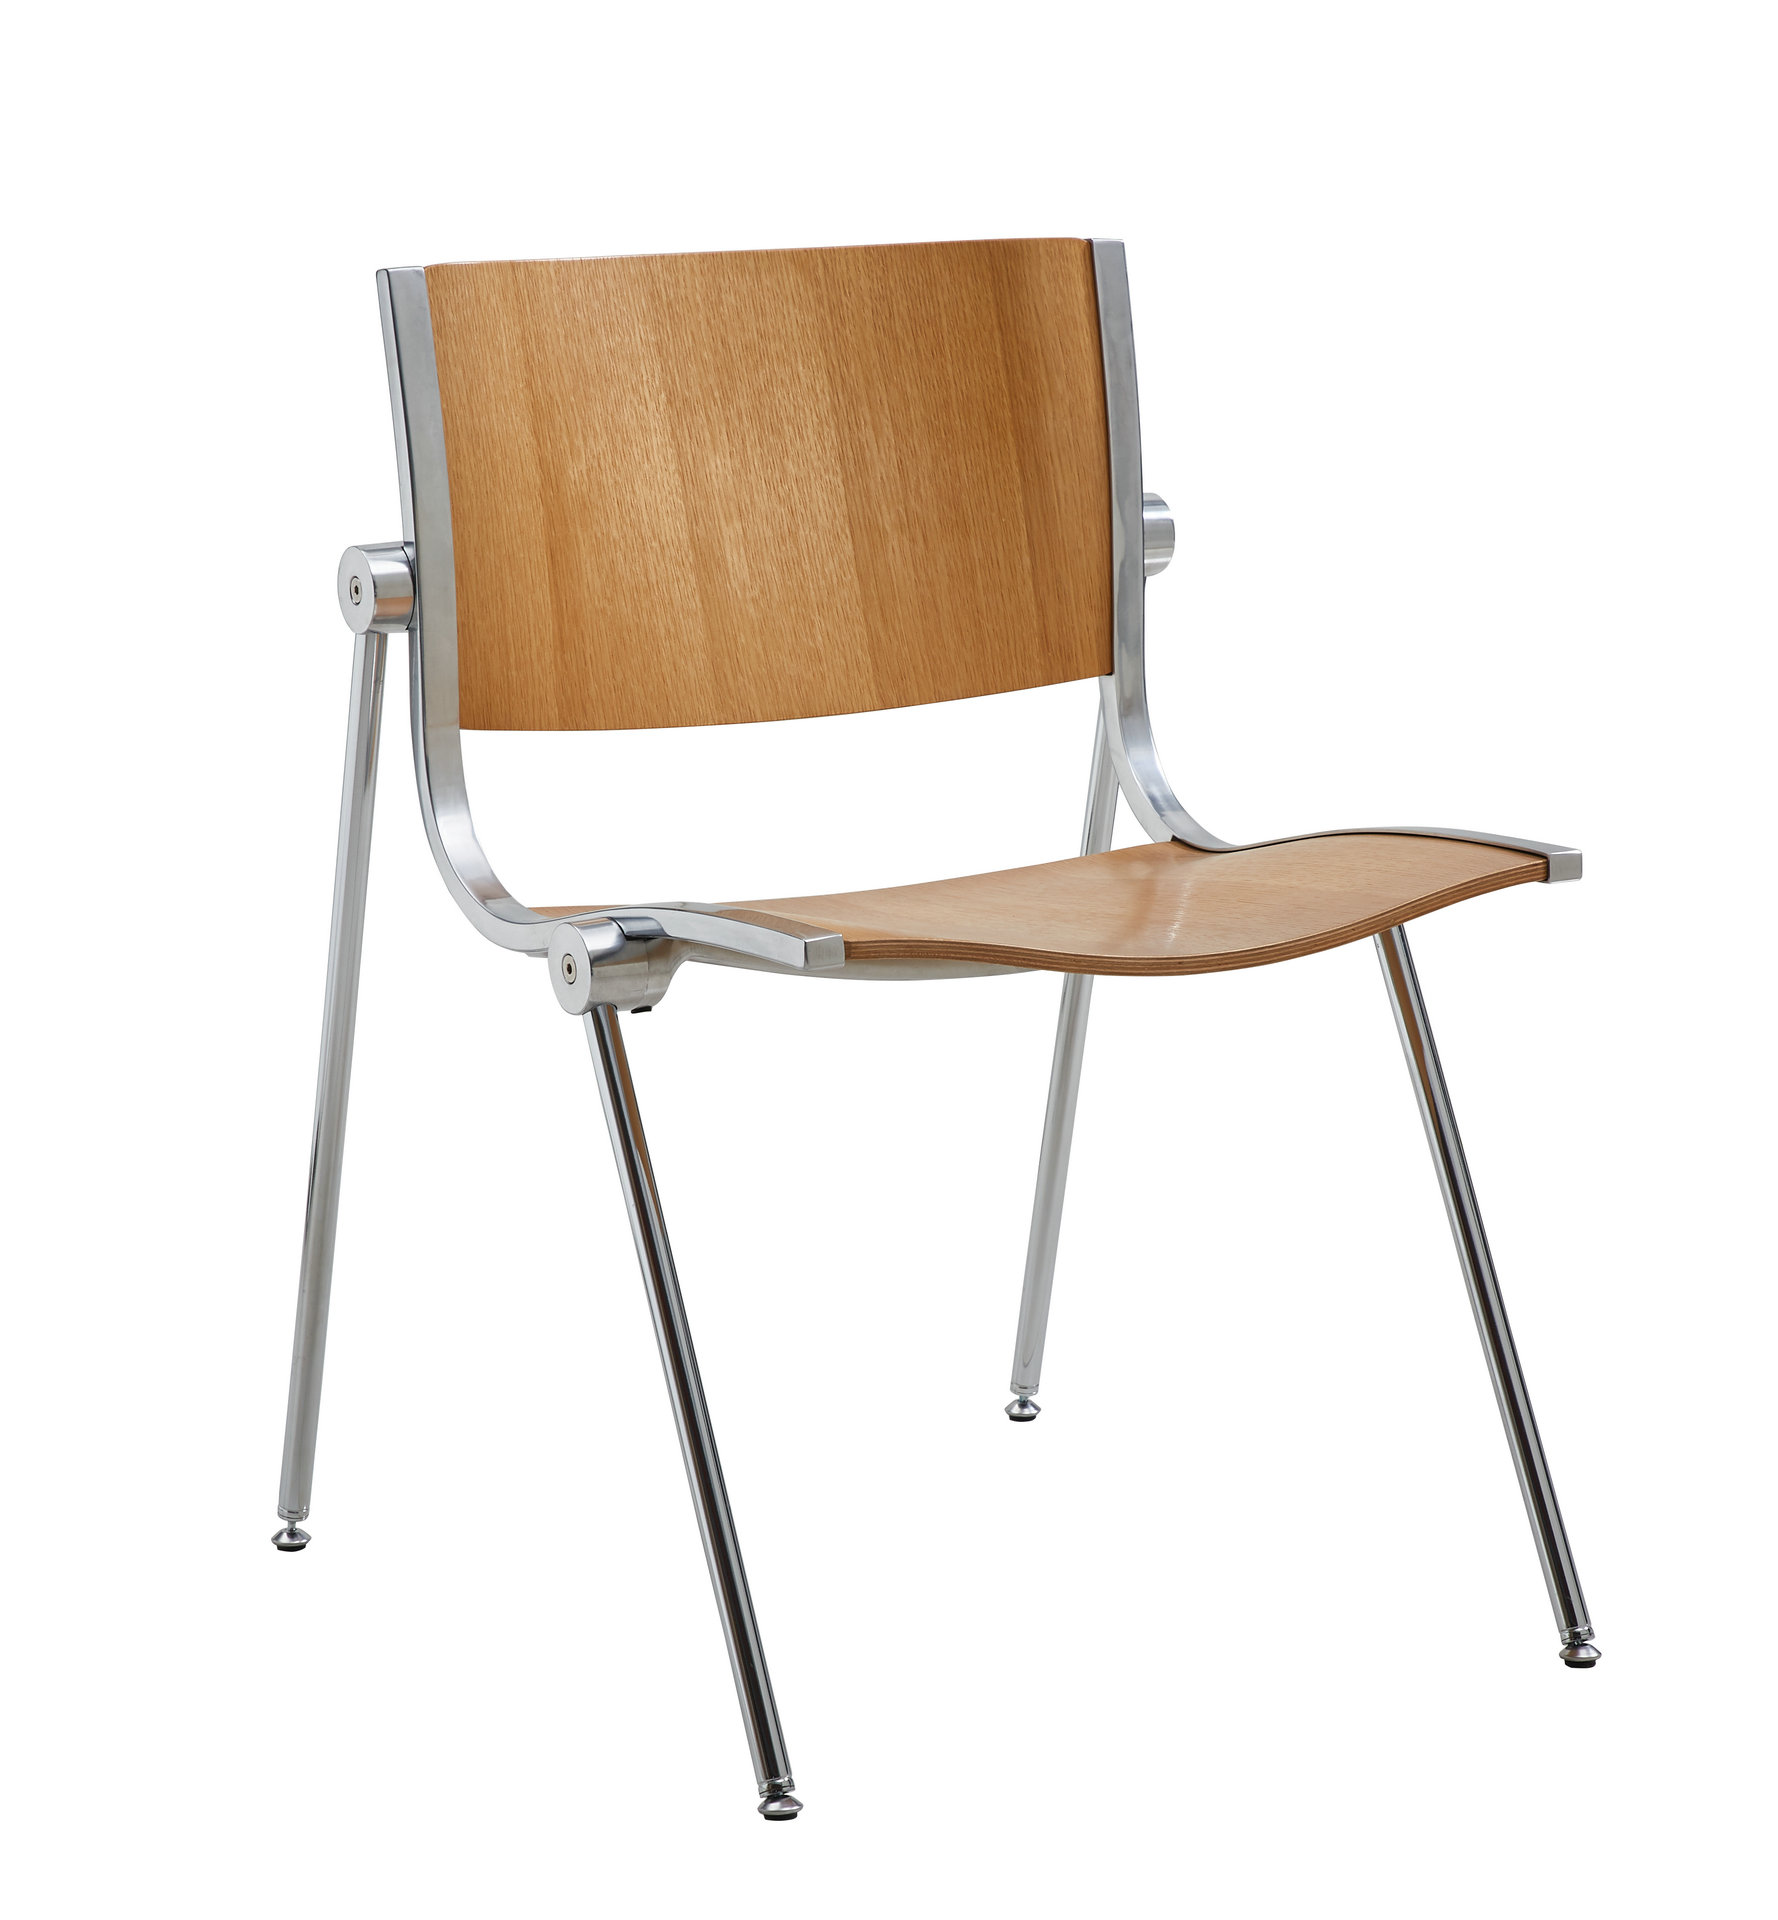 Italian Aluminium Chair From Vaghi